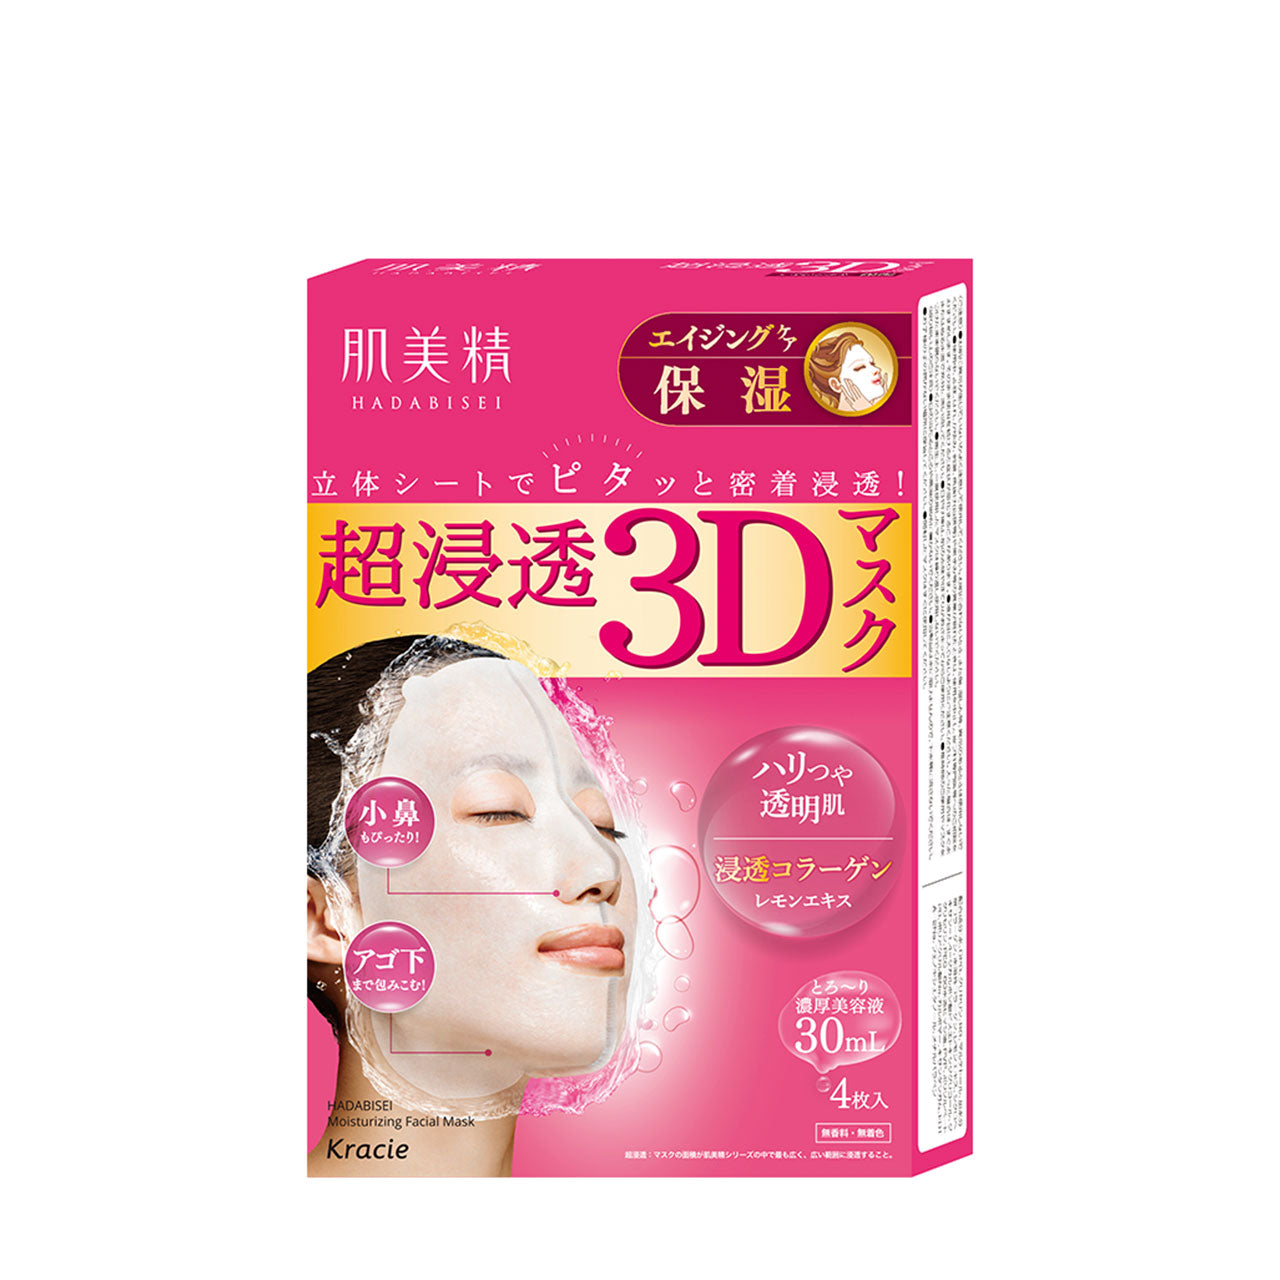 KRACIE Hadabisei Advanced Penetrating 3D Face Mask (Aging-care Moisturizing) 4piece  KRACIE 肌美精超滲透3D 抗皺保濕立體面膜 4片裝